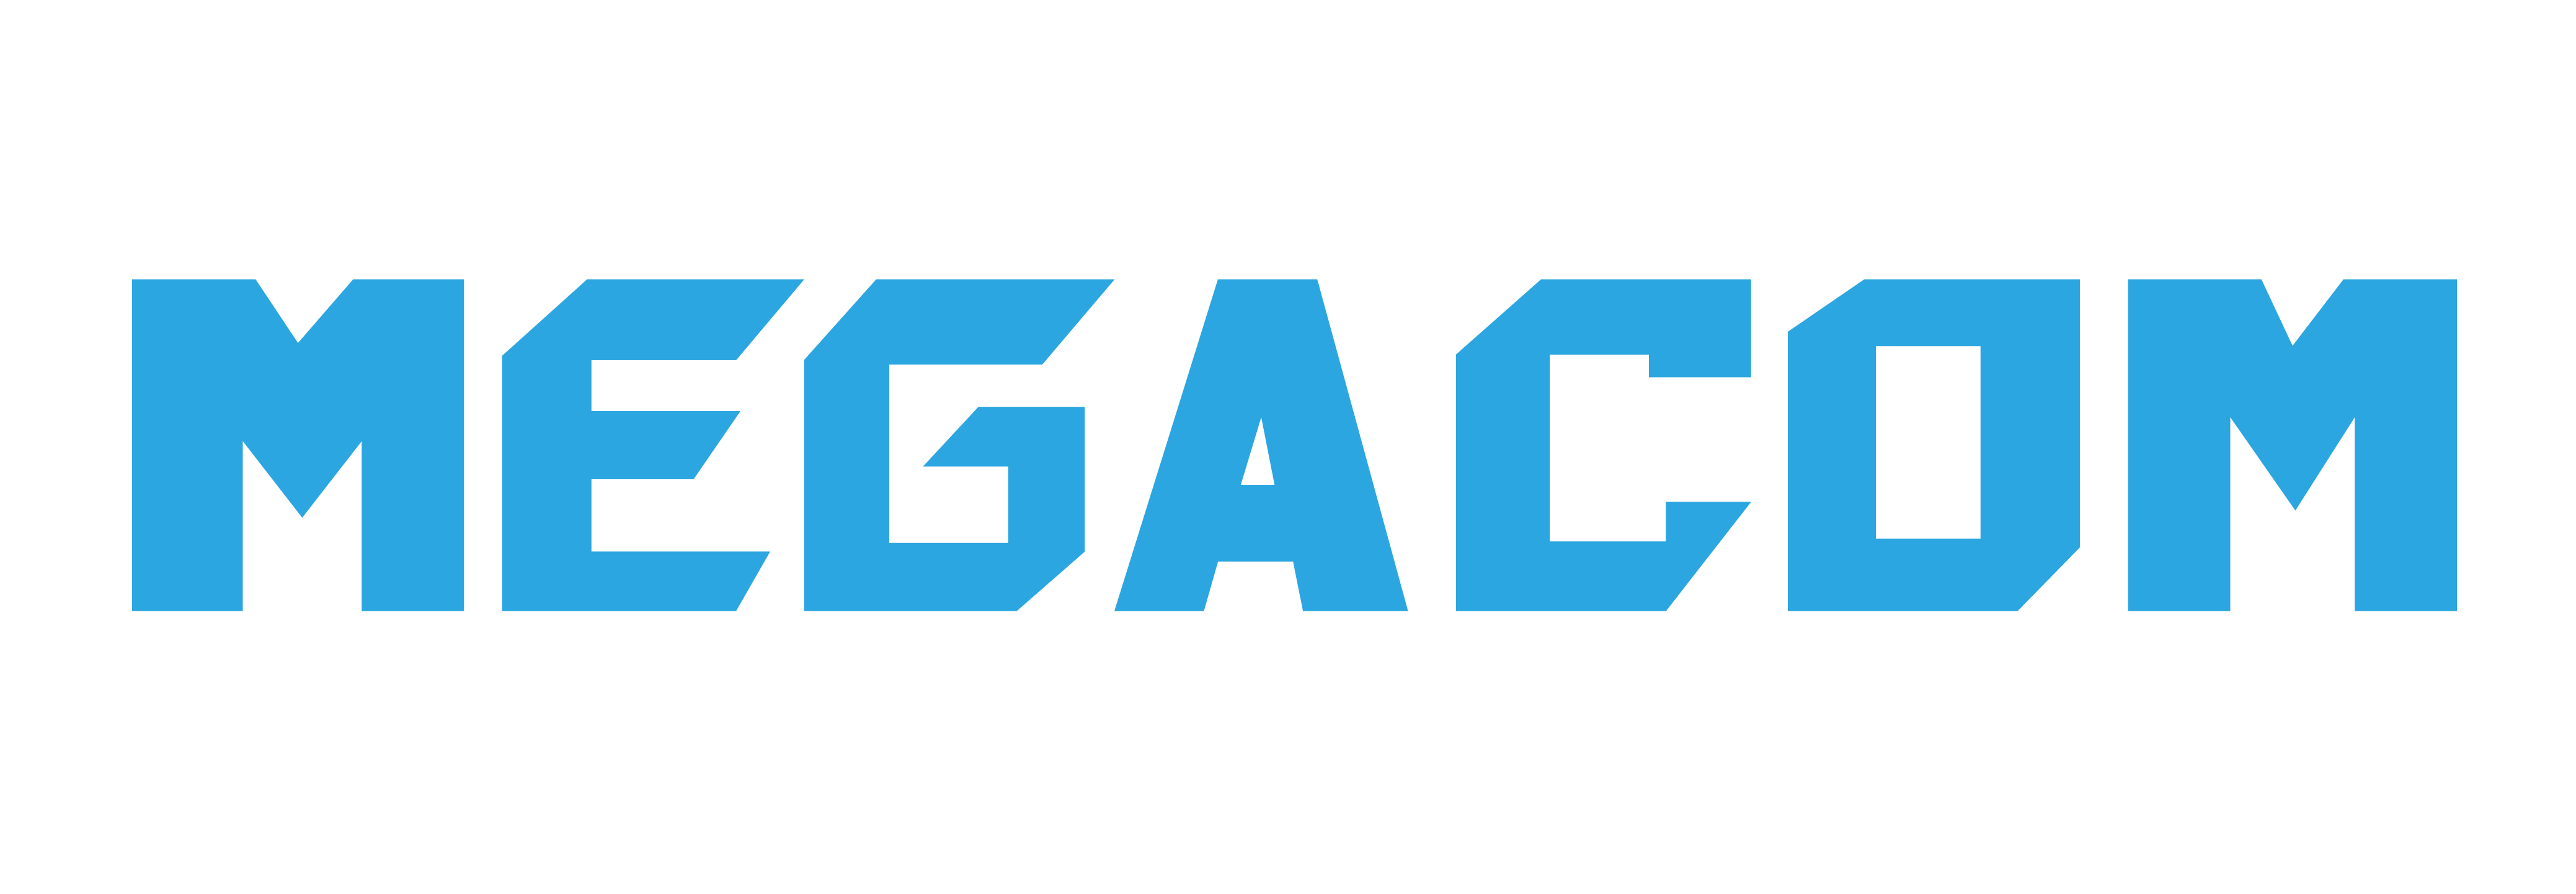 MEGACOM Auto Catcher - Online Store